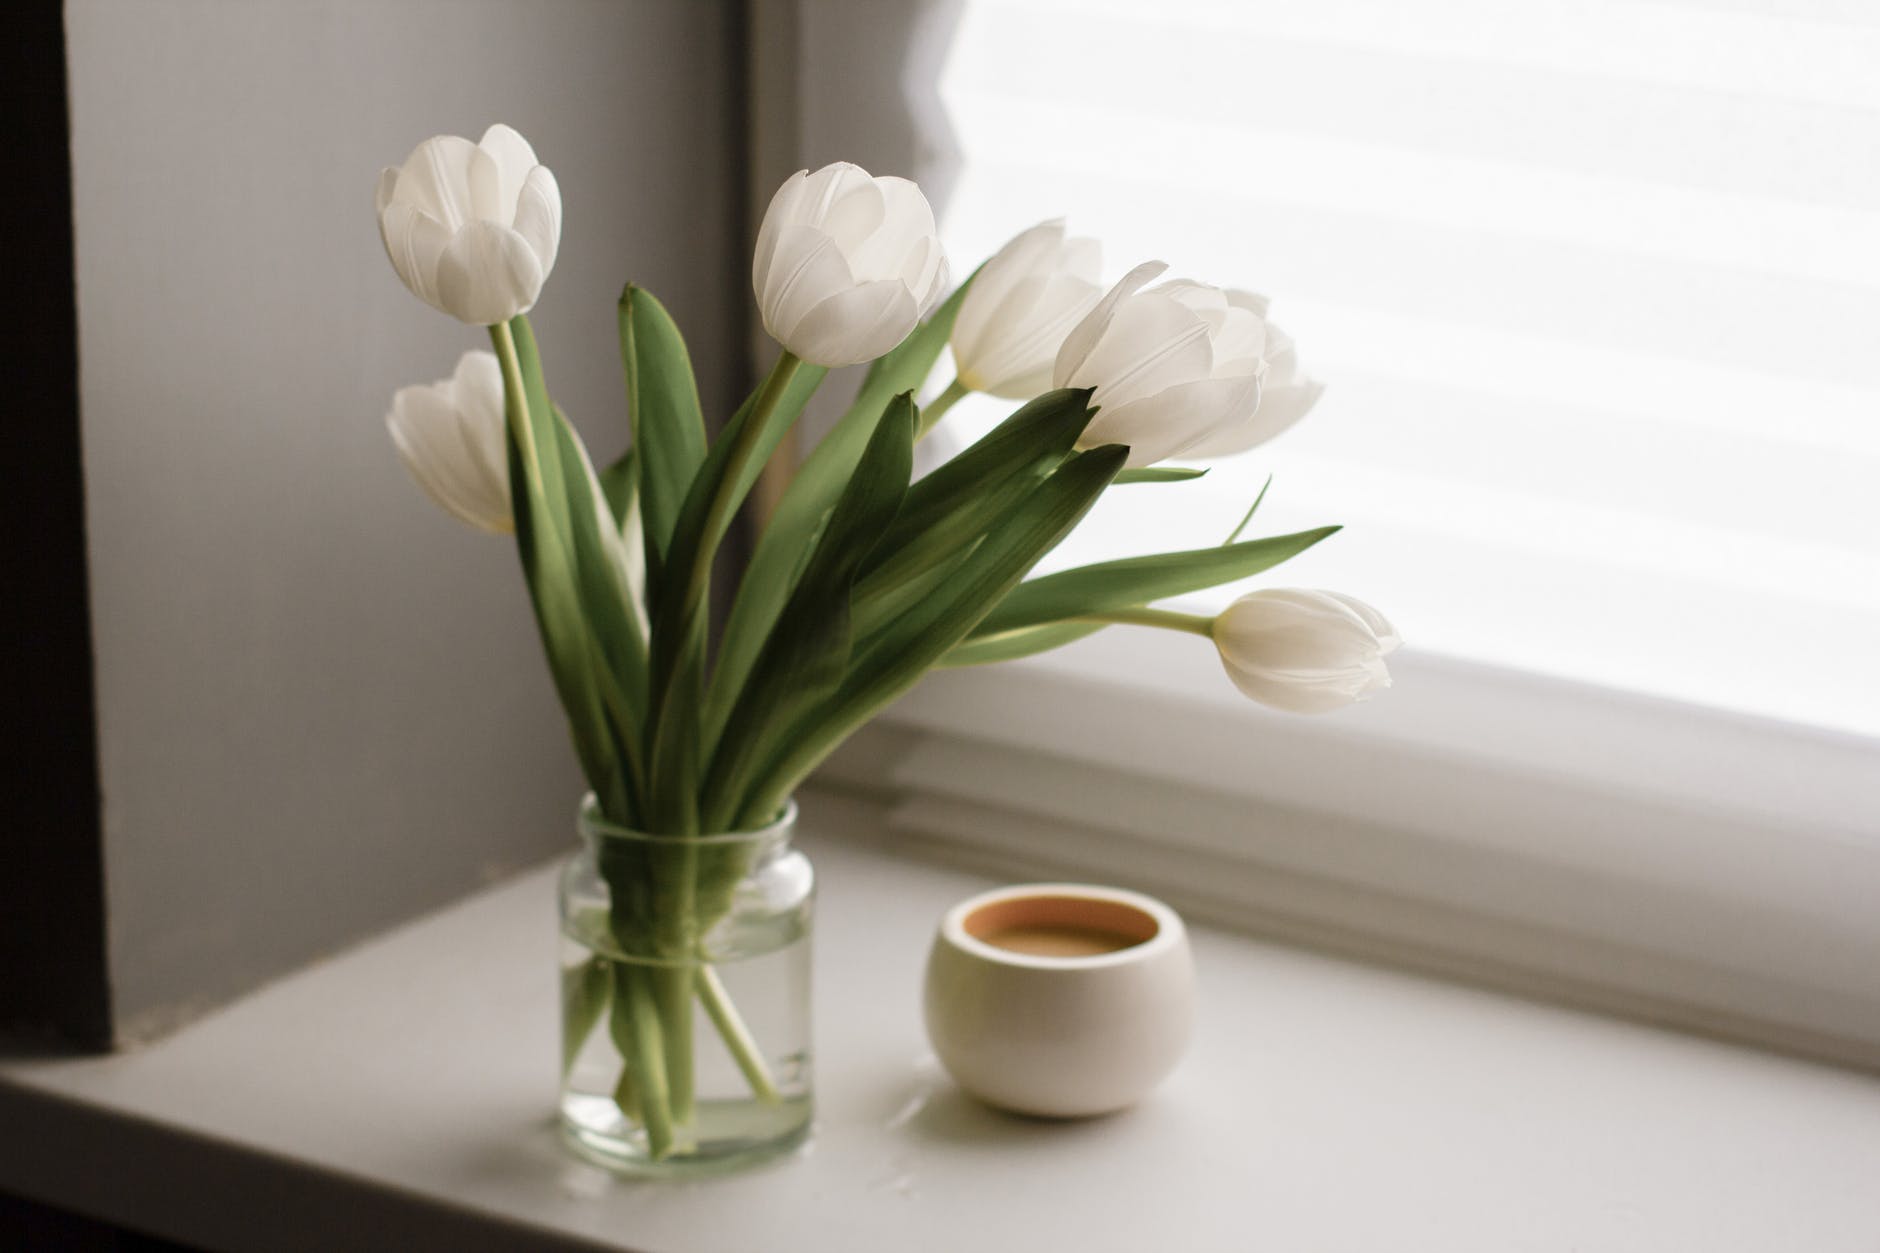 bouquet on windowsill near cup of coffee